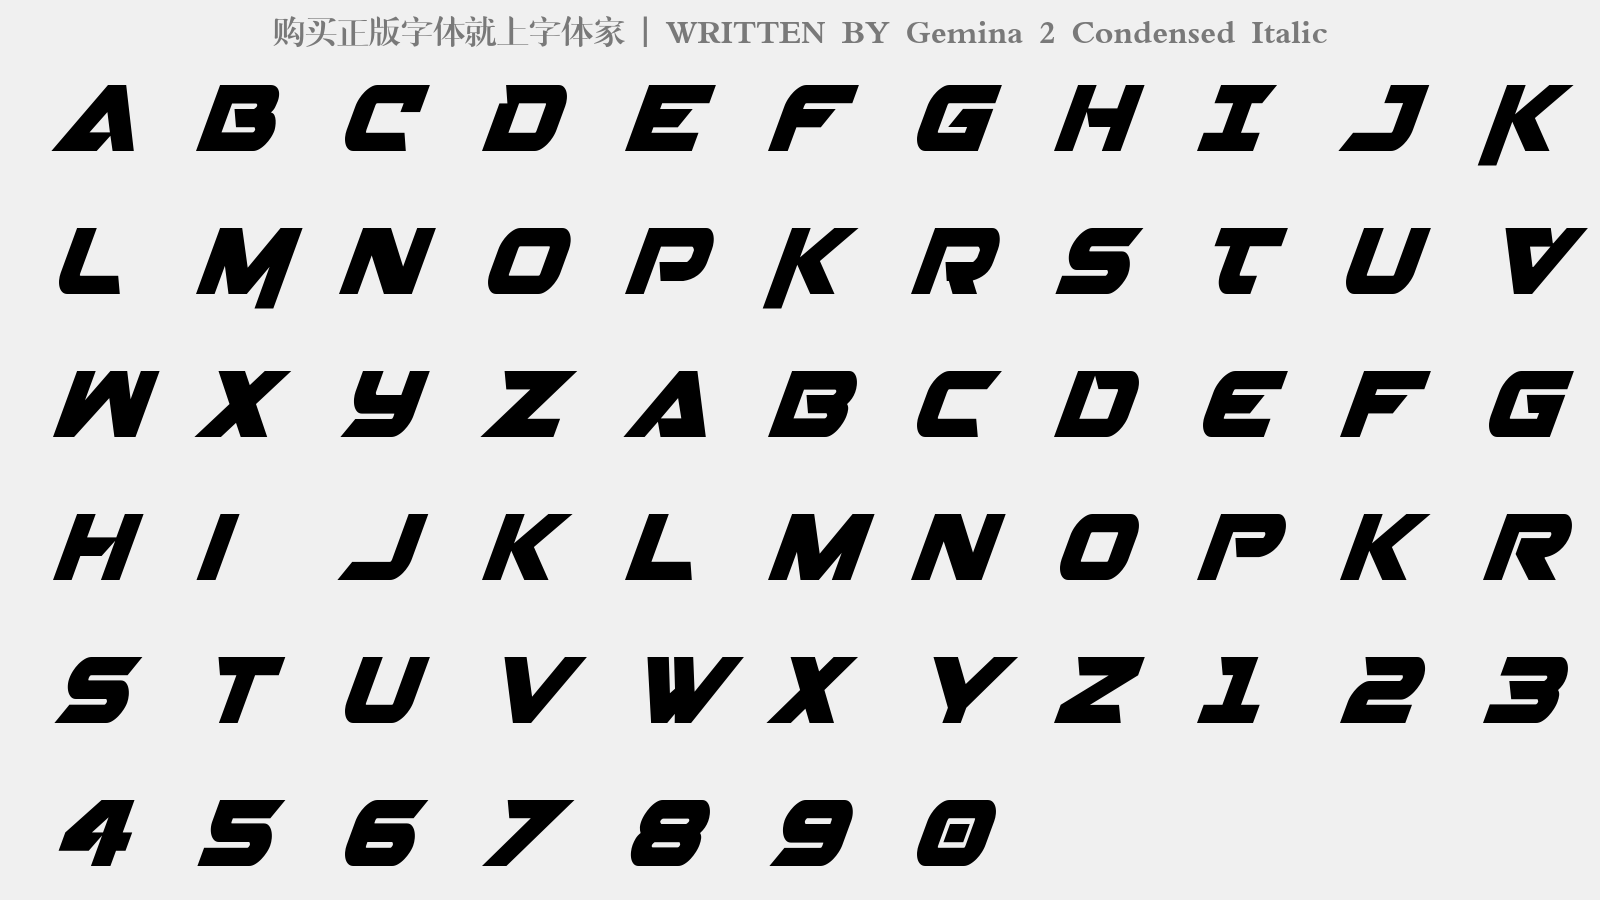 Gemina 2 Condensed Italic - 大写字母/小写字母/数字